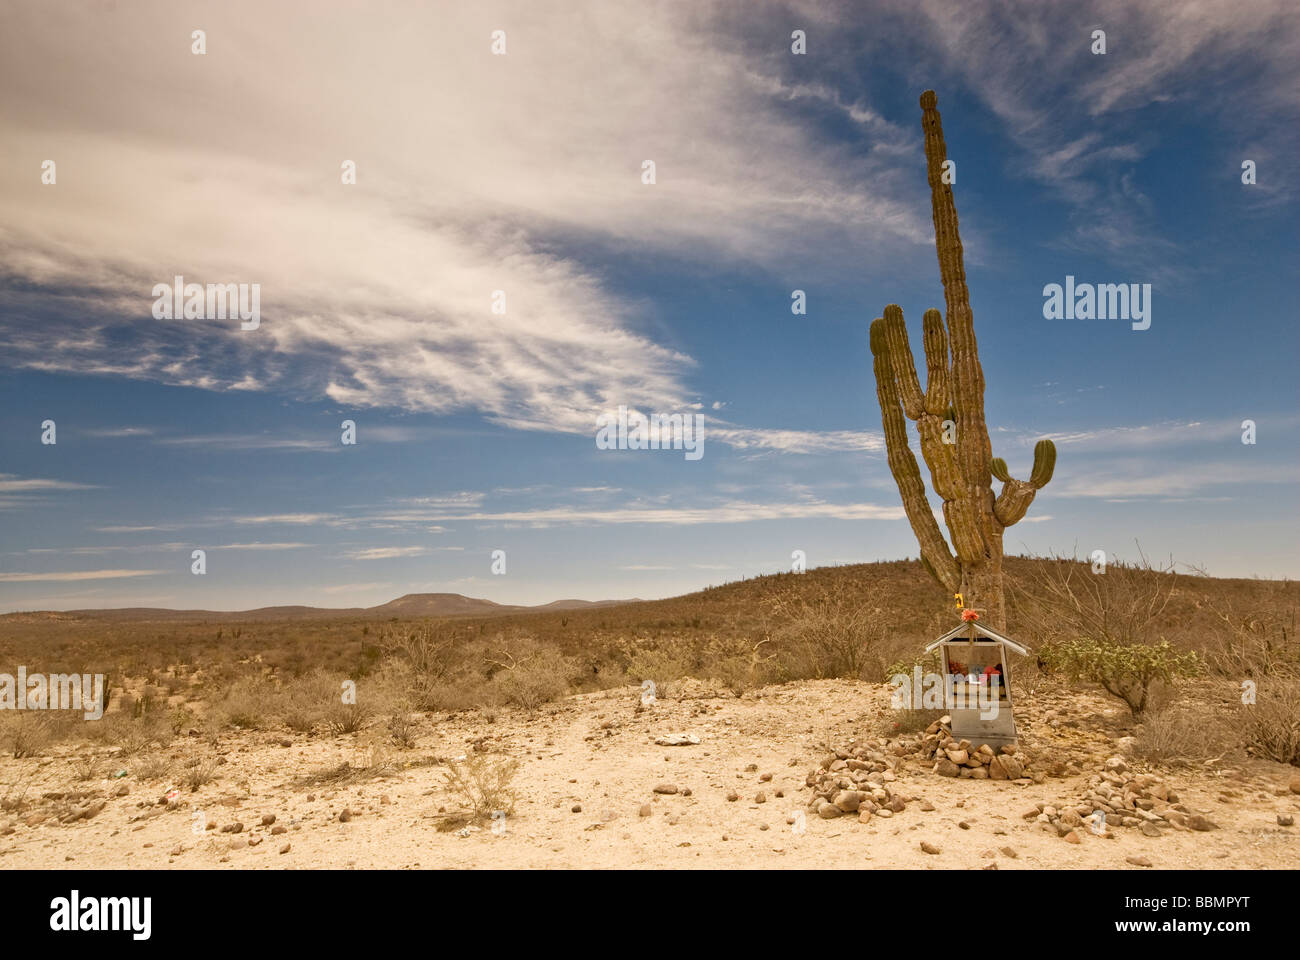 Shrine at cardon cactus in Sierra de la Giganta near Mision San Luis Gonzaga Baja California Sur Mexico Stock Photo